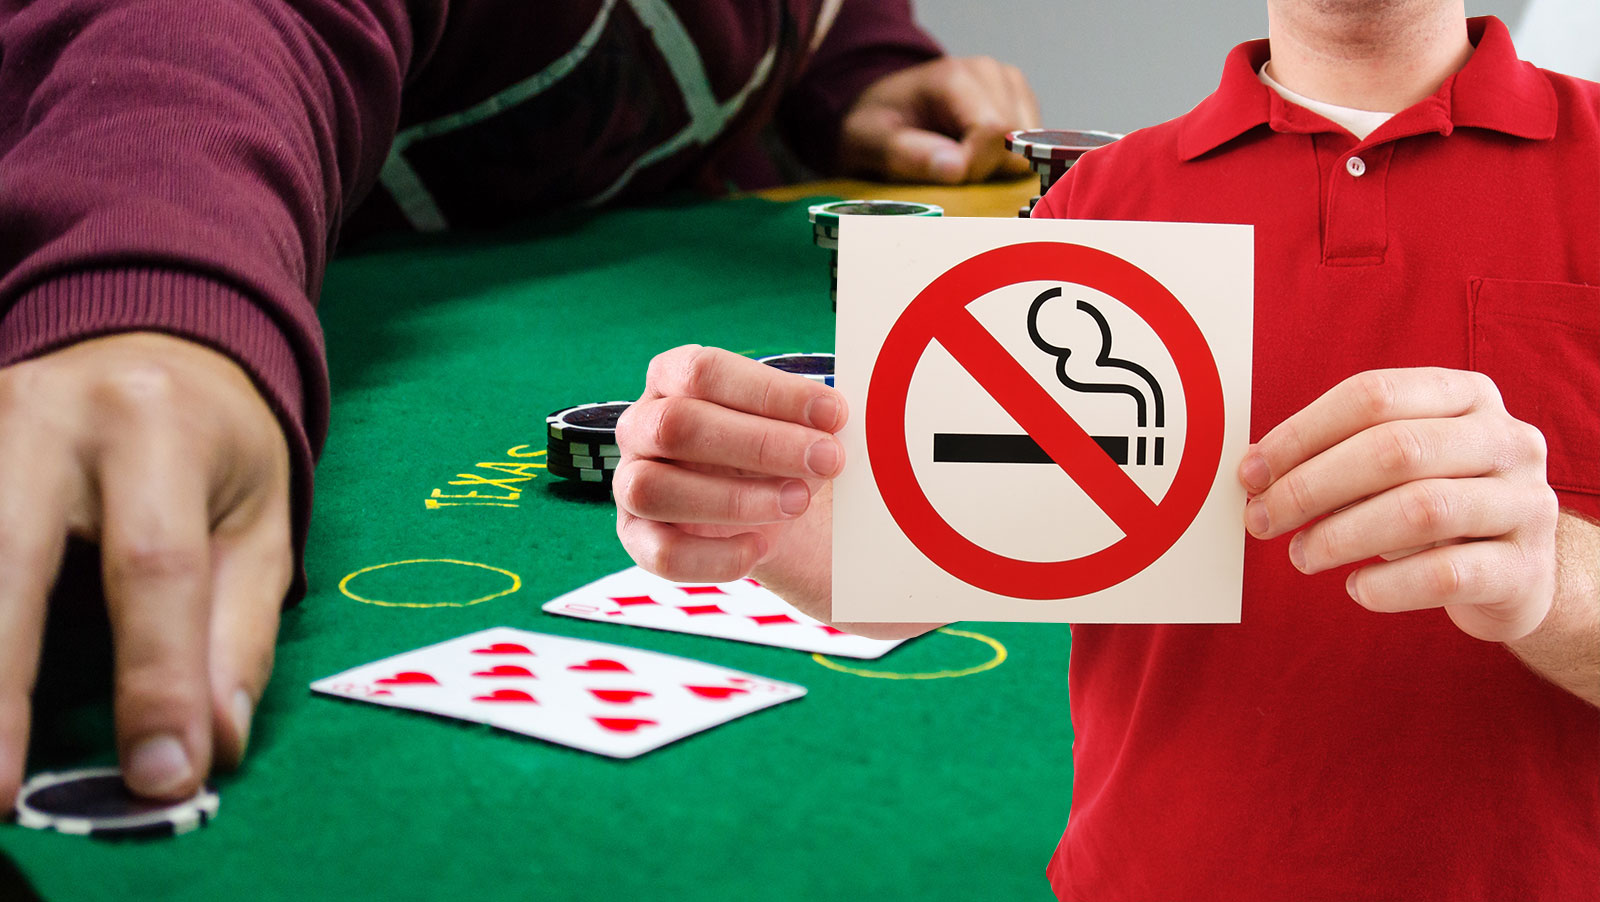 Macau gamblers increasingly break casino no-smoking rules